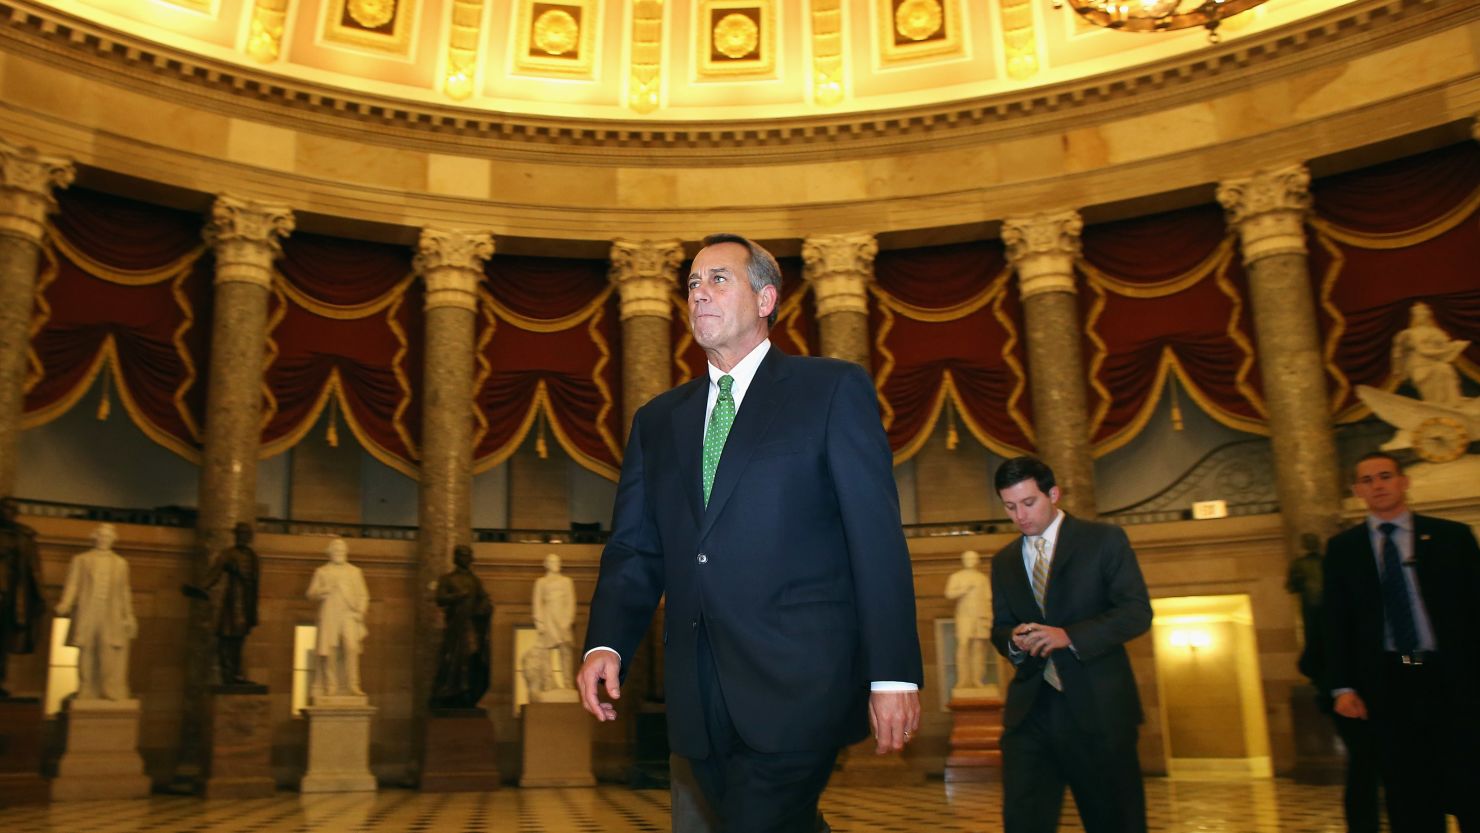 Errol Louis says House Speaker John Boehner is caught between pragmatic and radical factions in his party.